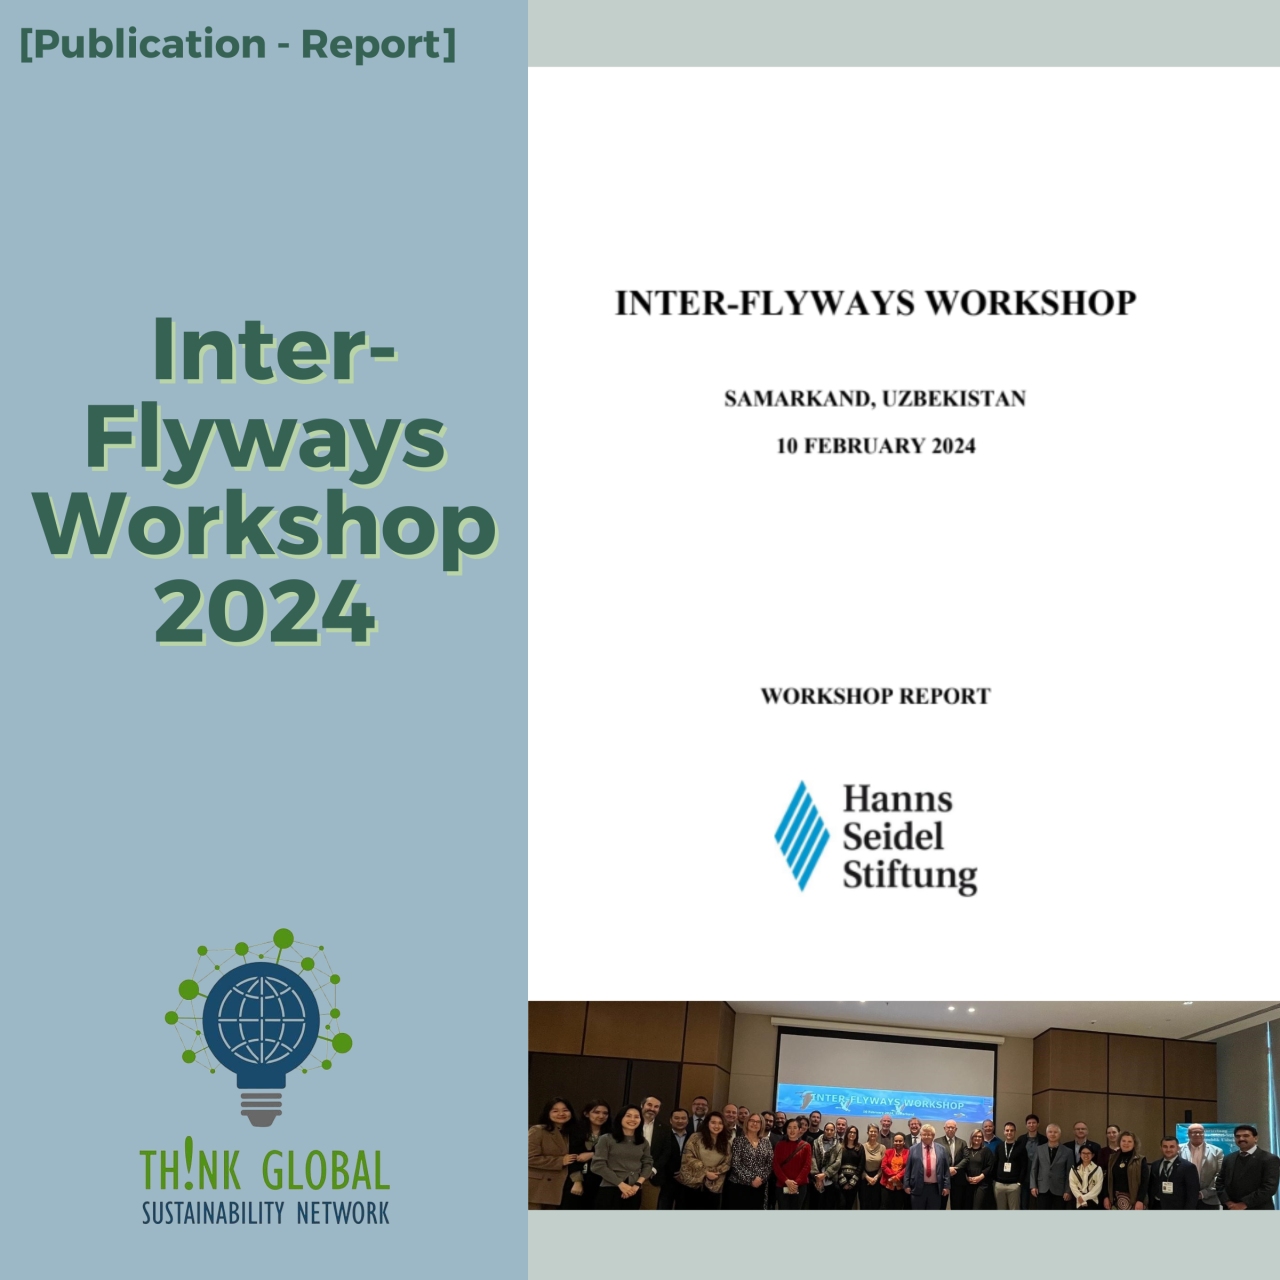 Publication - report: Inter-Flyways Workshop 2024